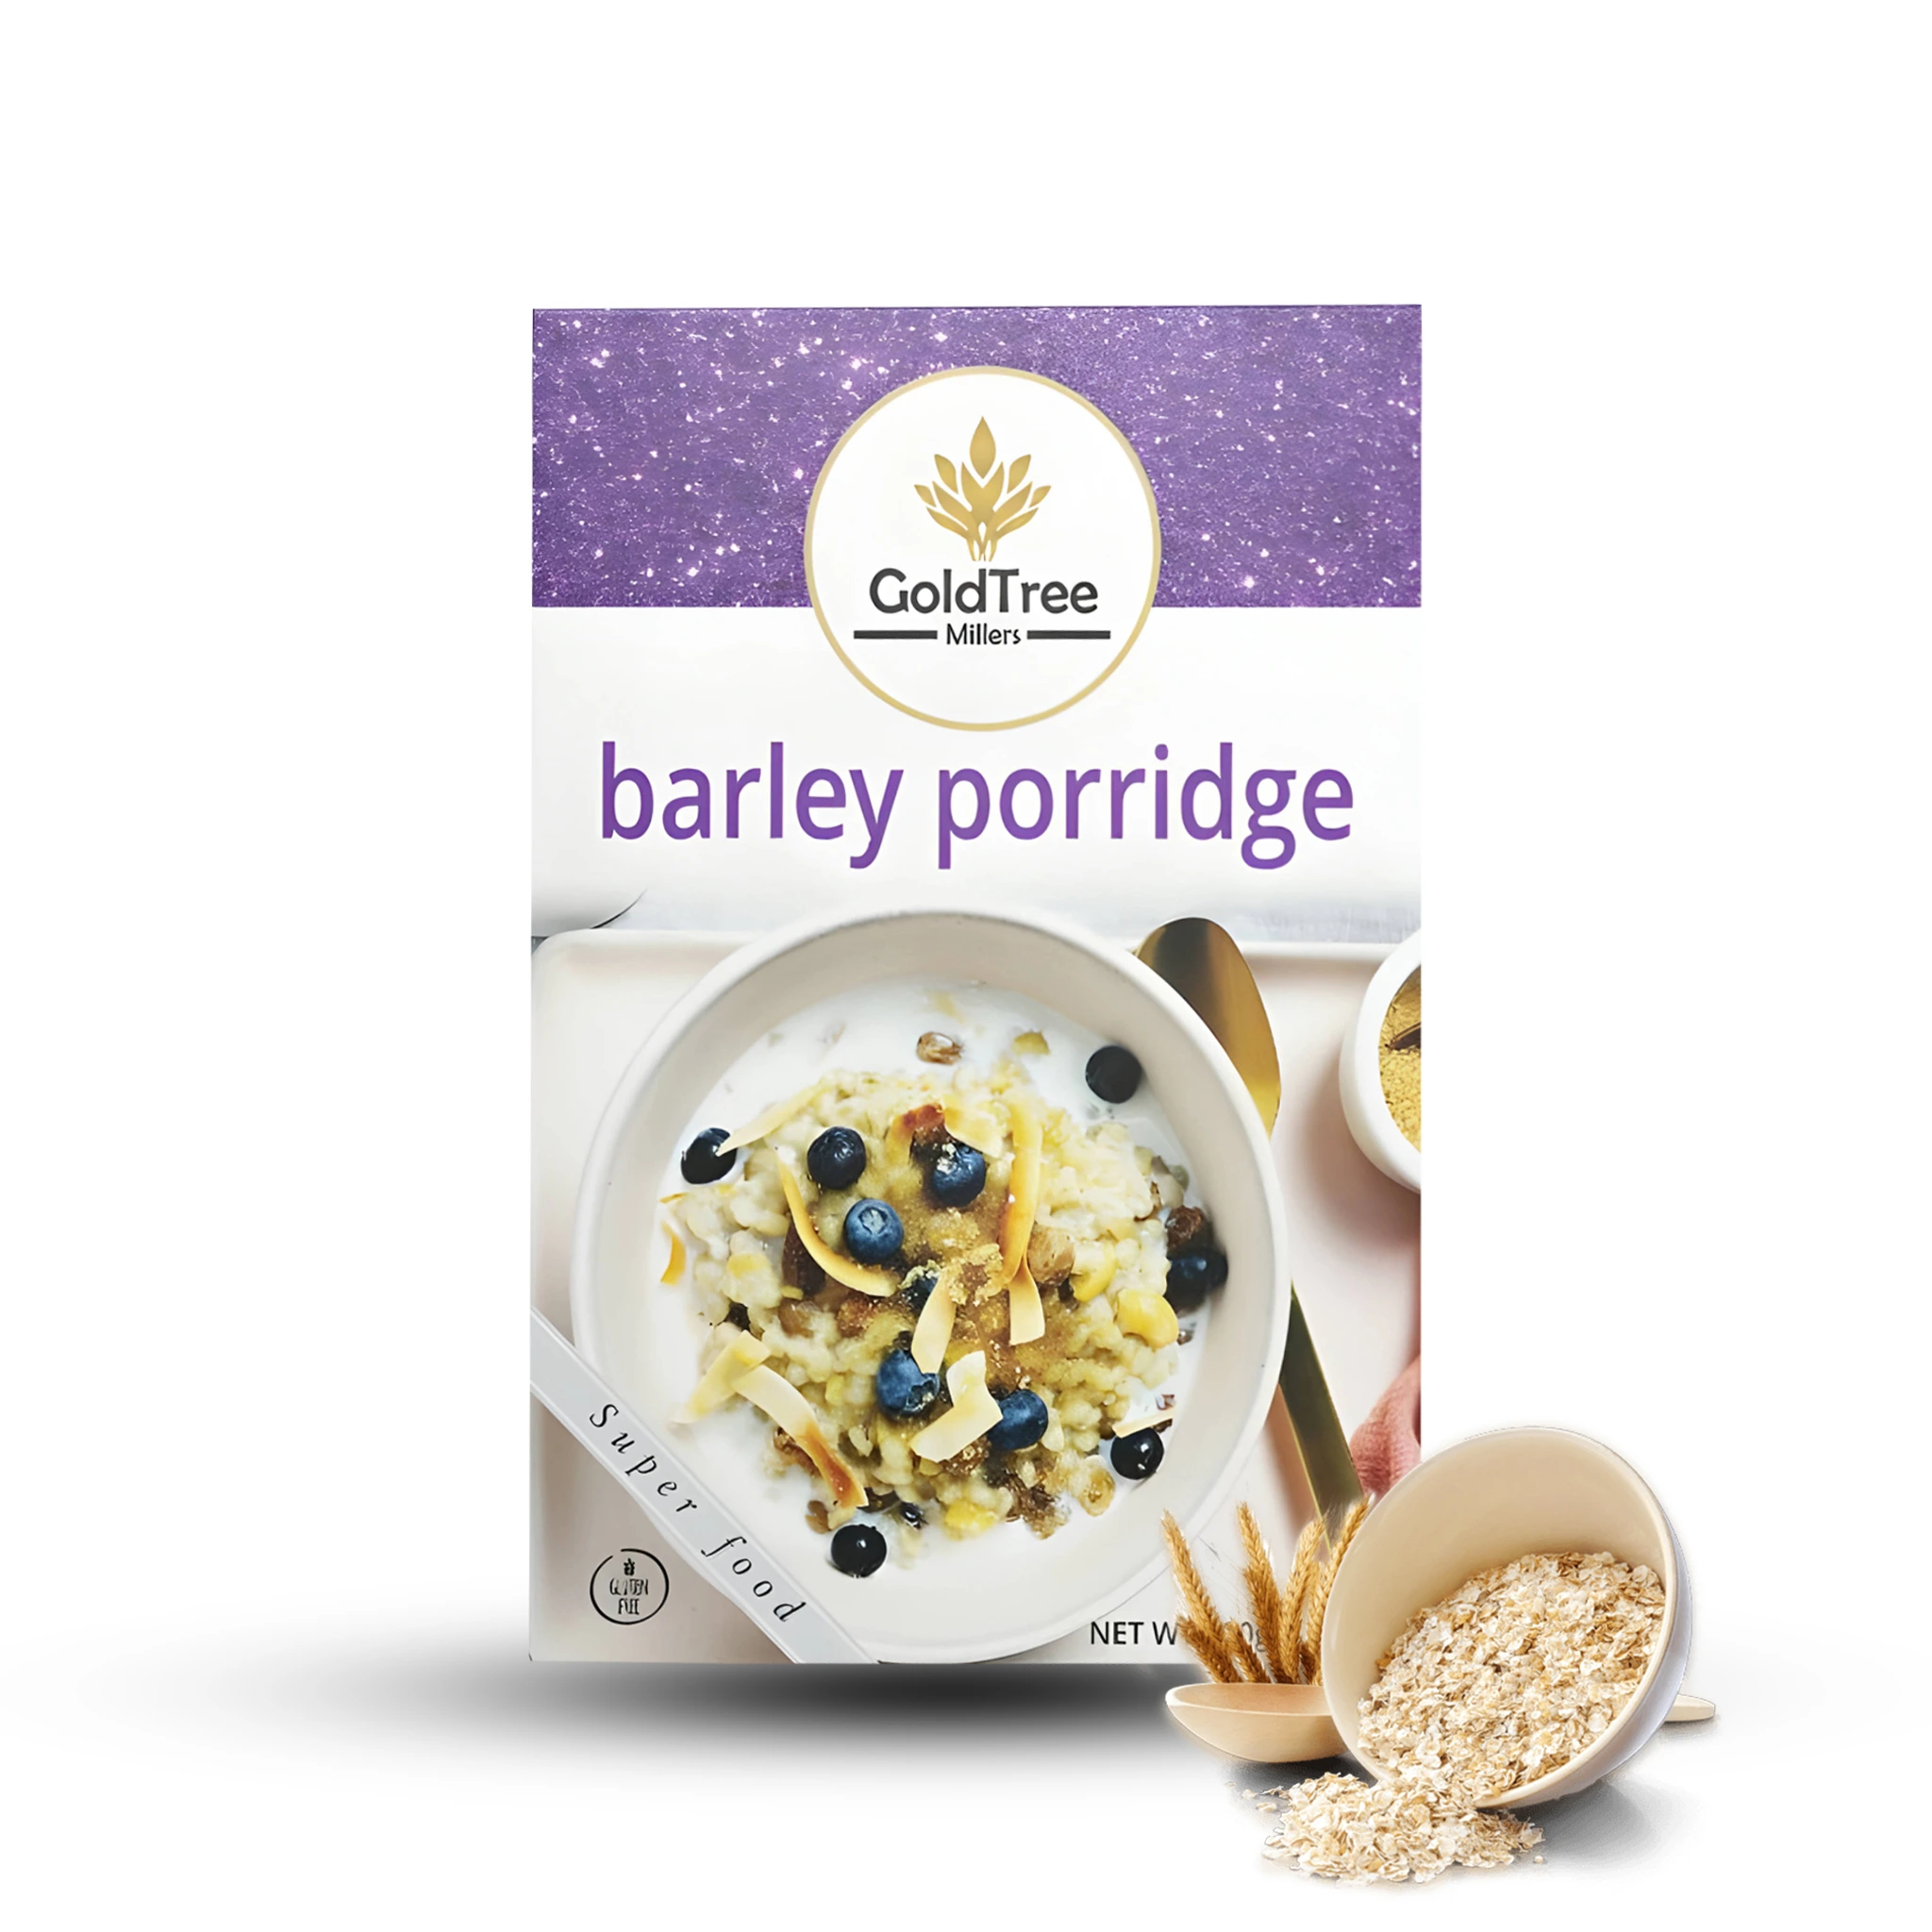 barley porridge benefits